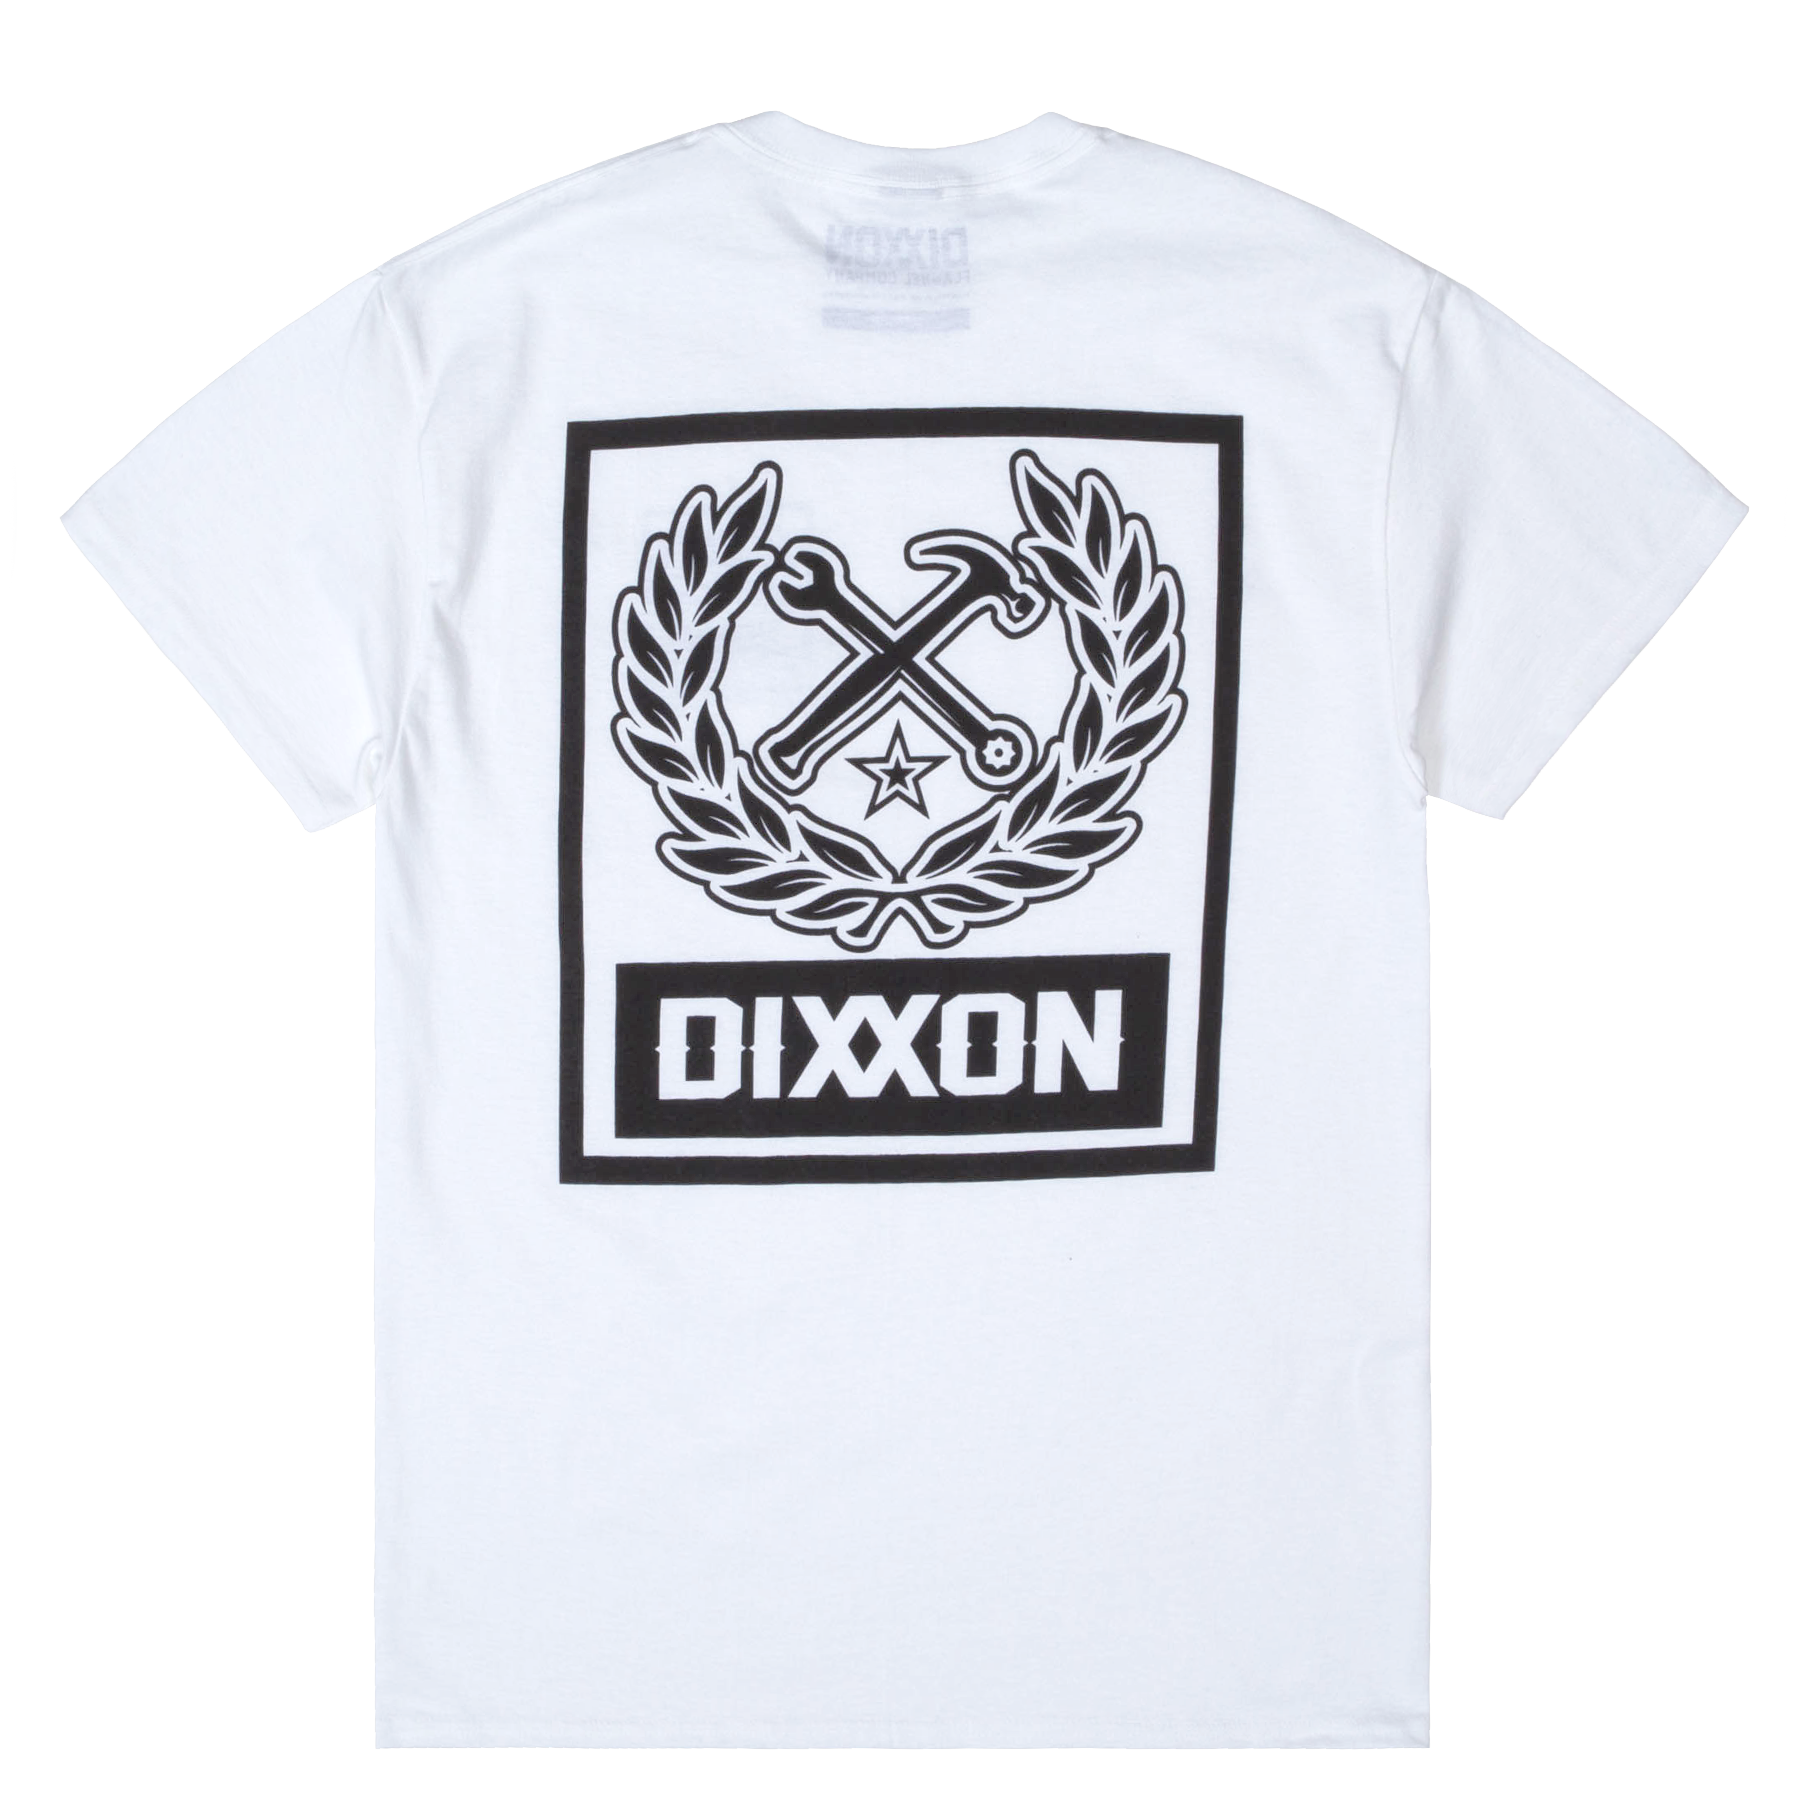 Box Crest T-Shirt - White & Black - Dixxon Flannel Co.